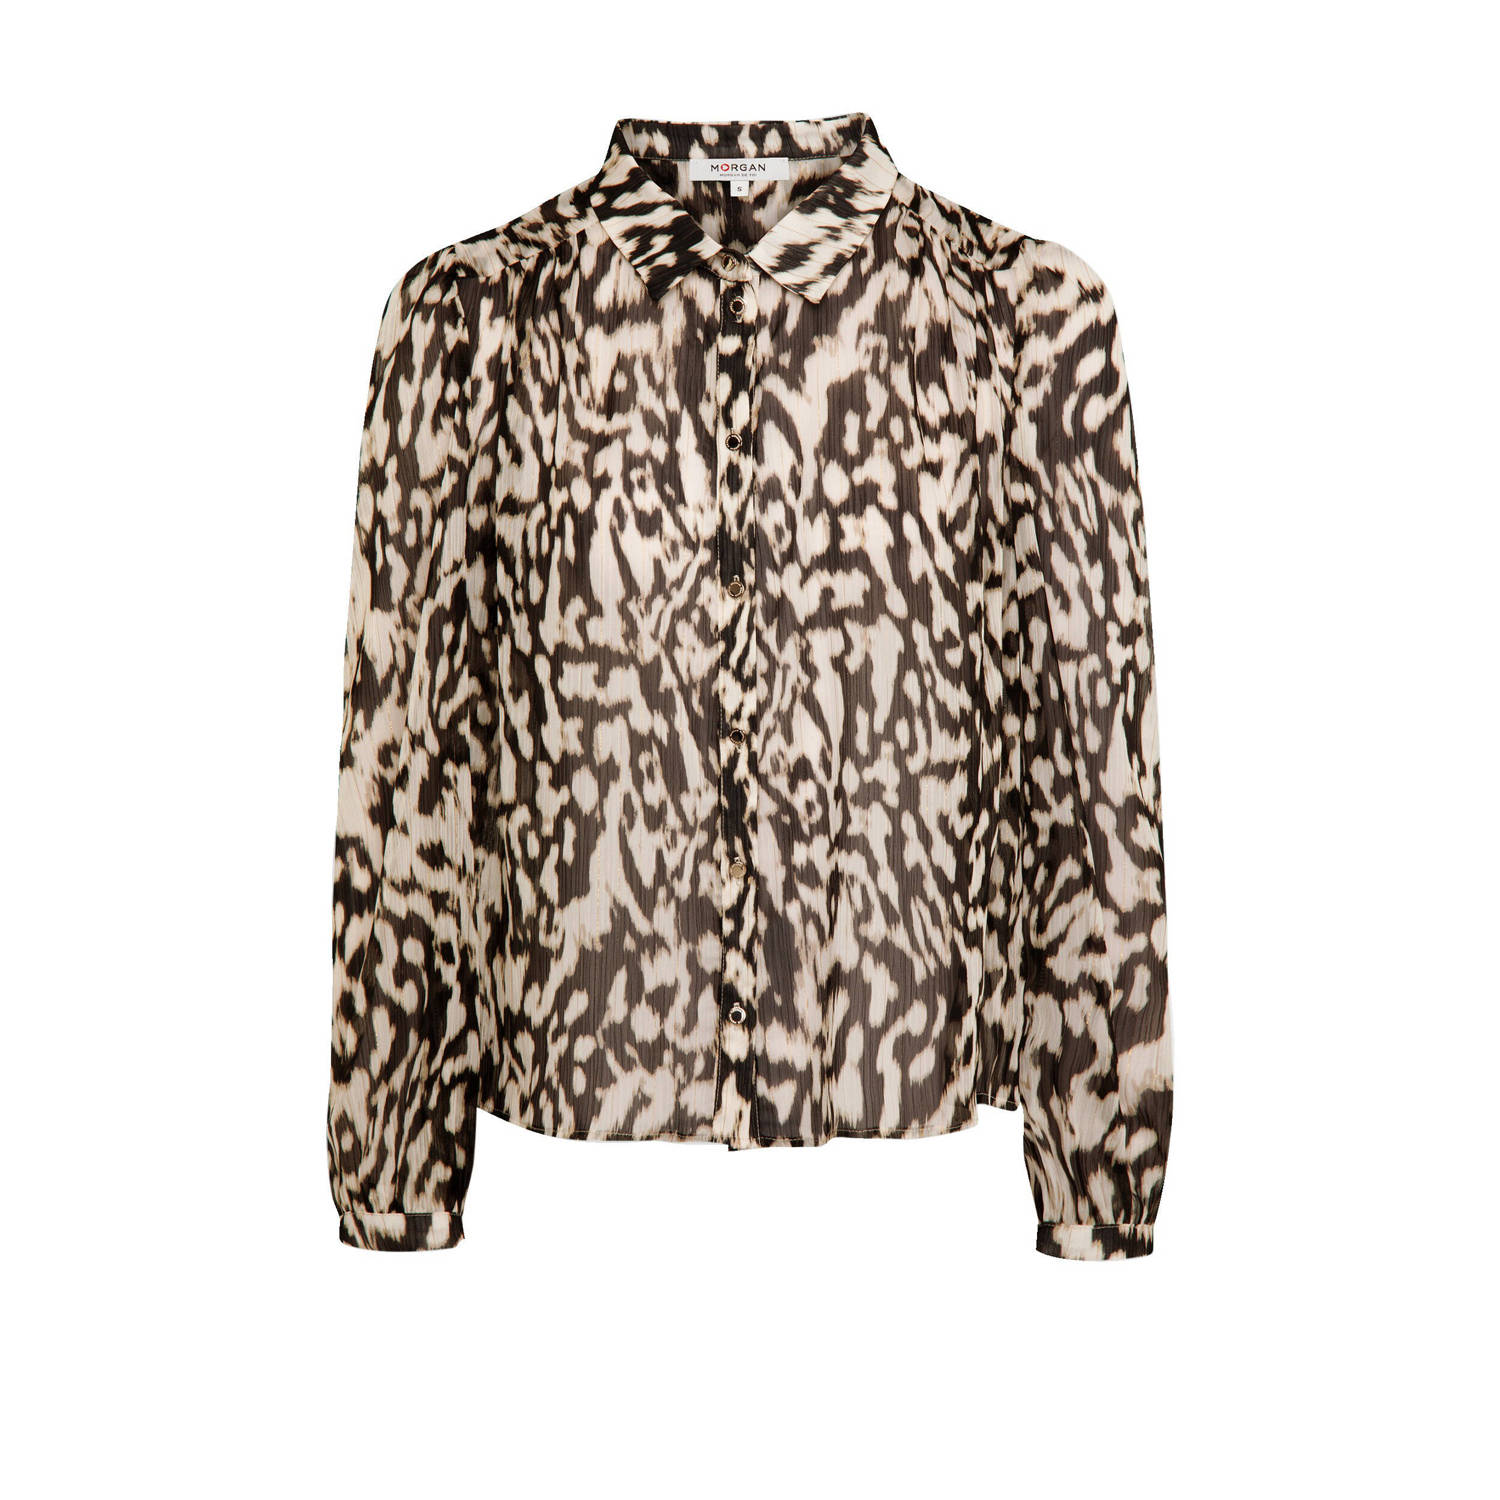 Morgan semi-transparante blouse met dierenprint bruin ecru